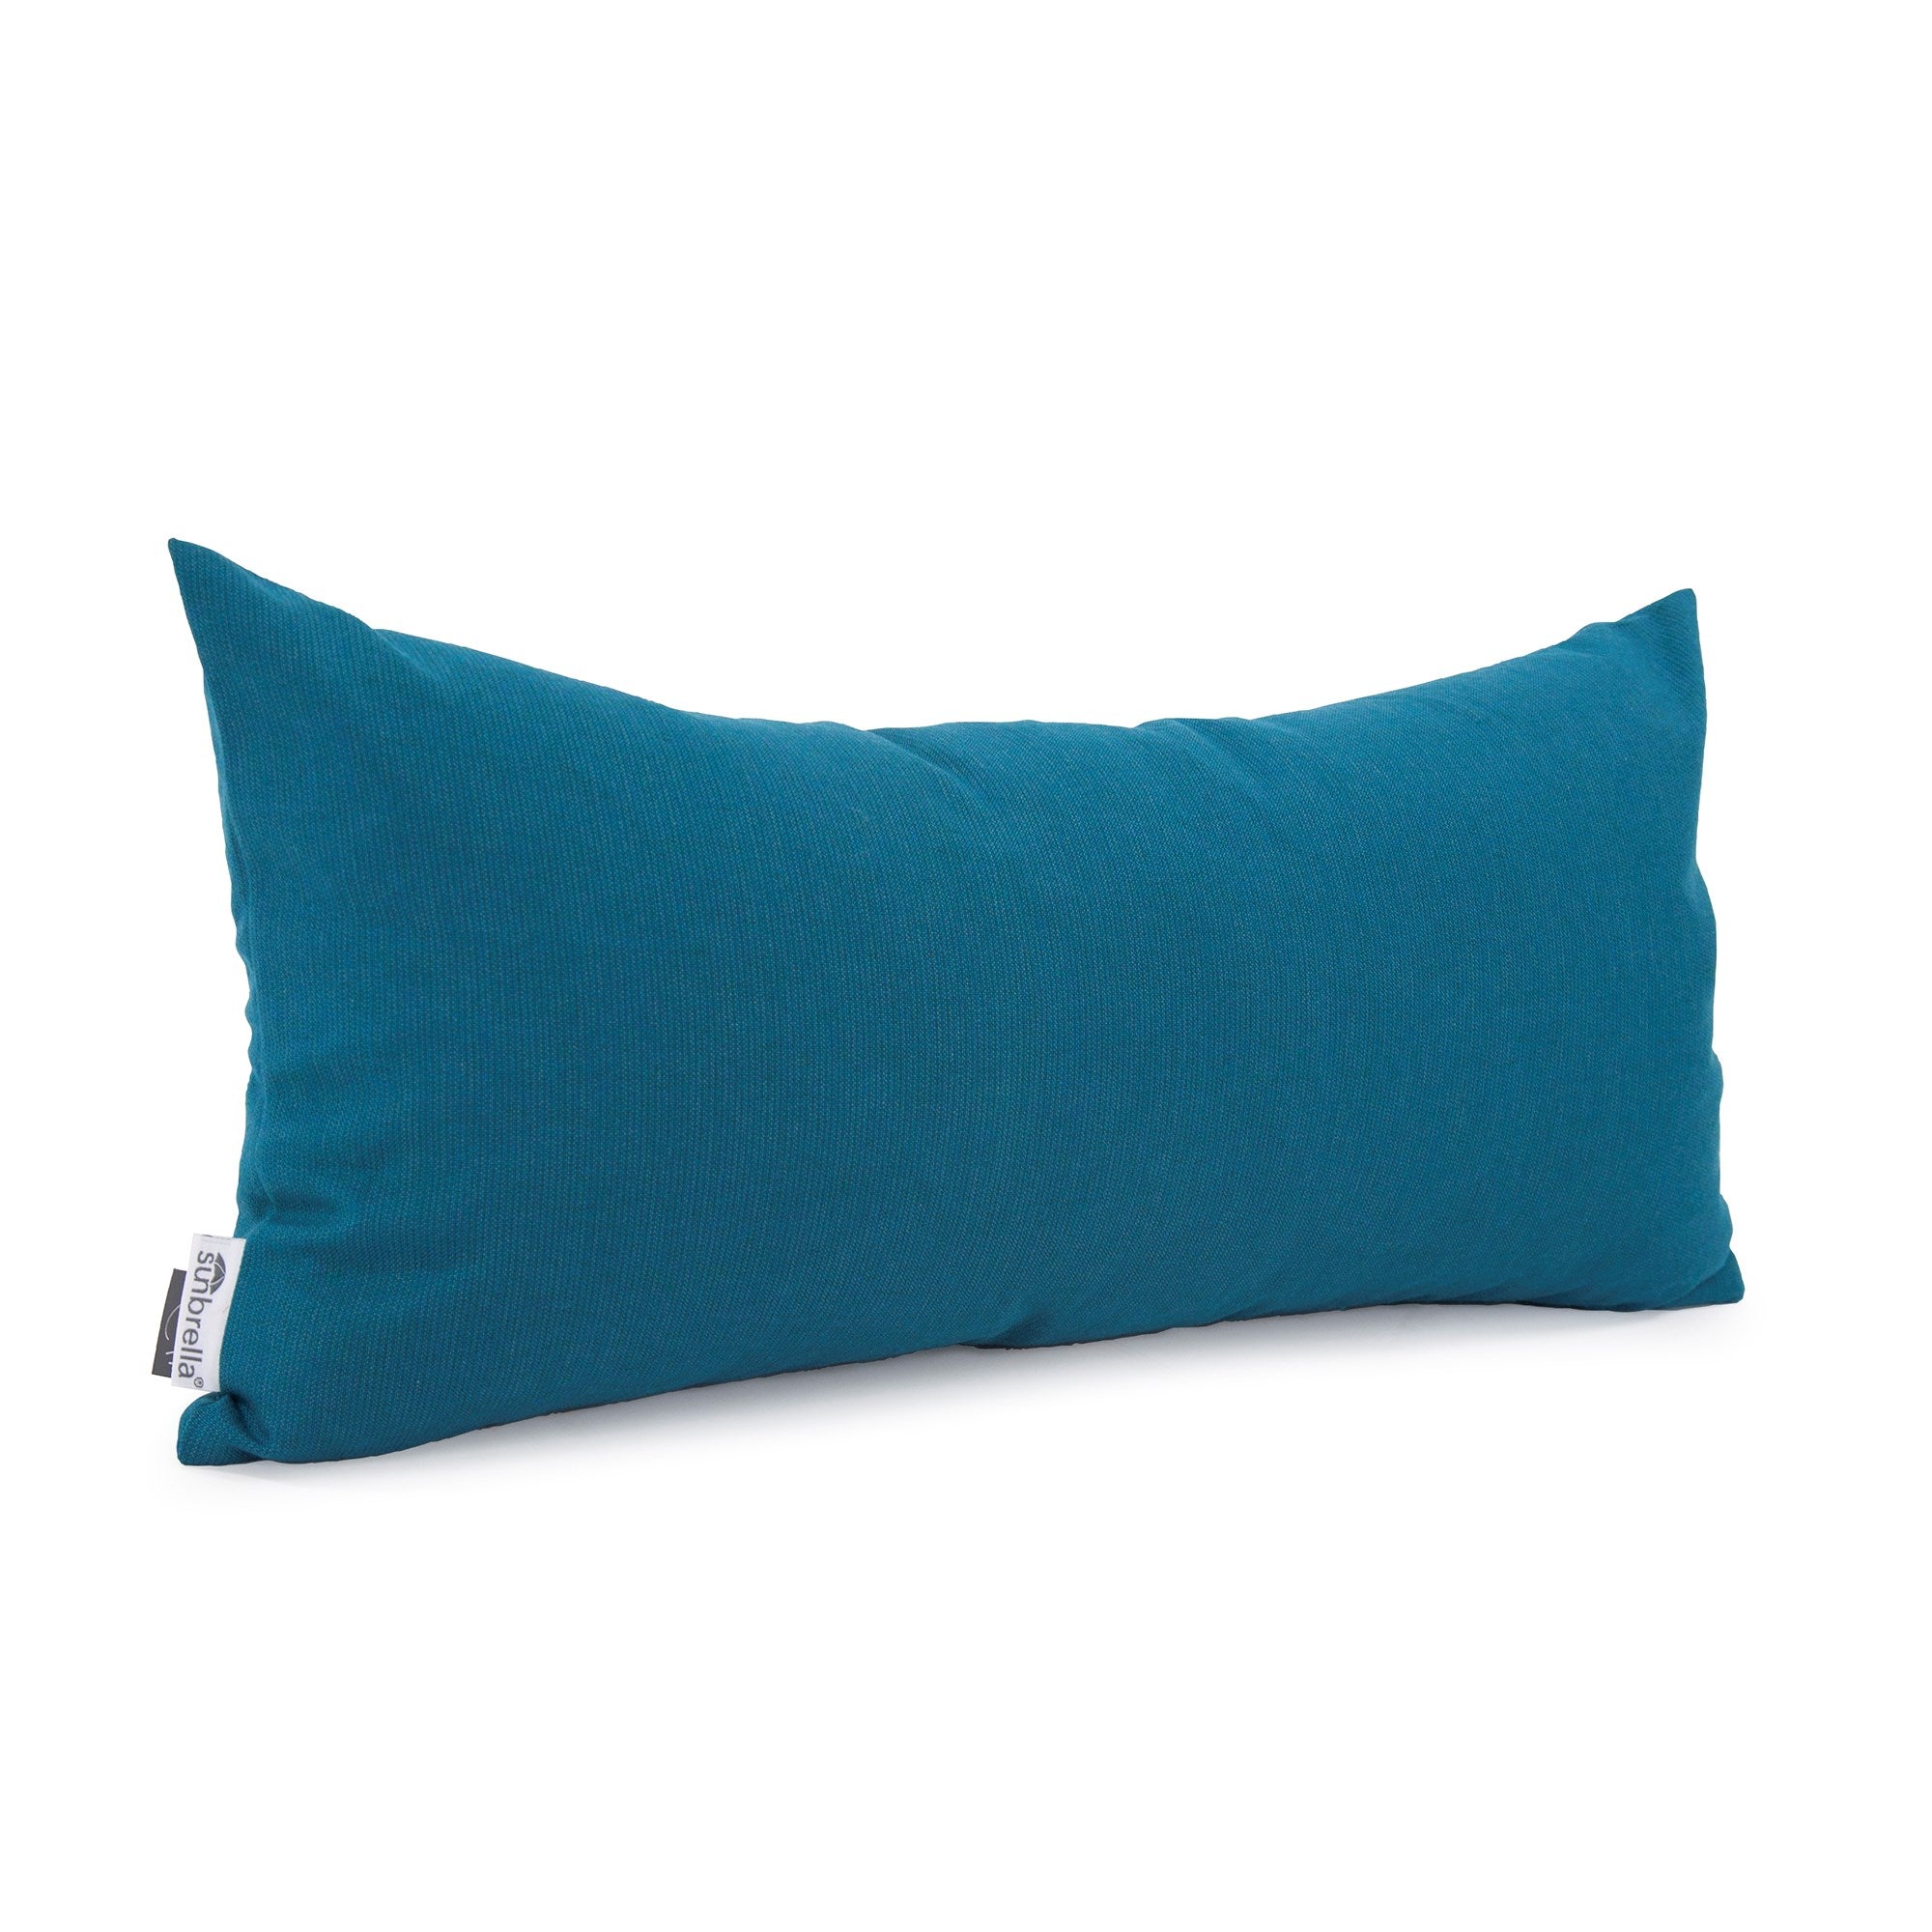 Seascape Turquoise Kidney Pillow- 11" x 22"